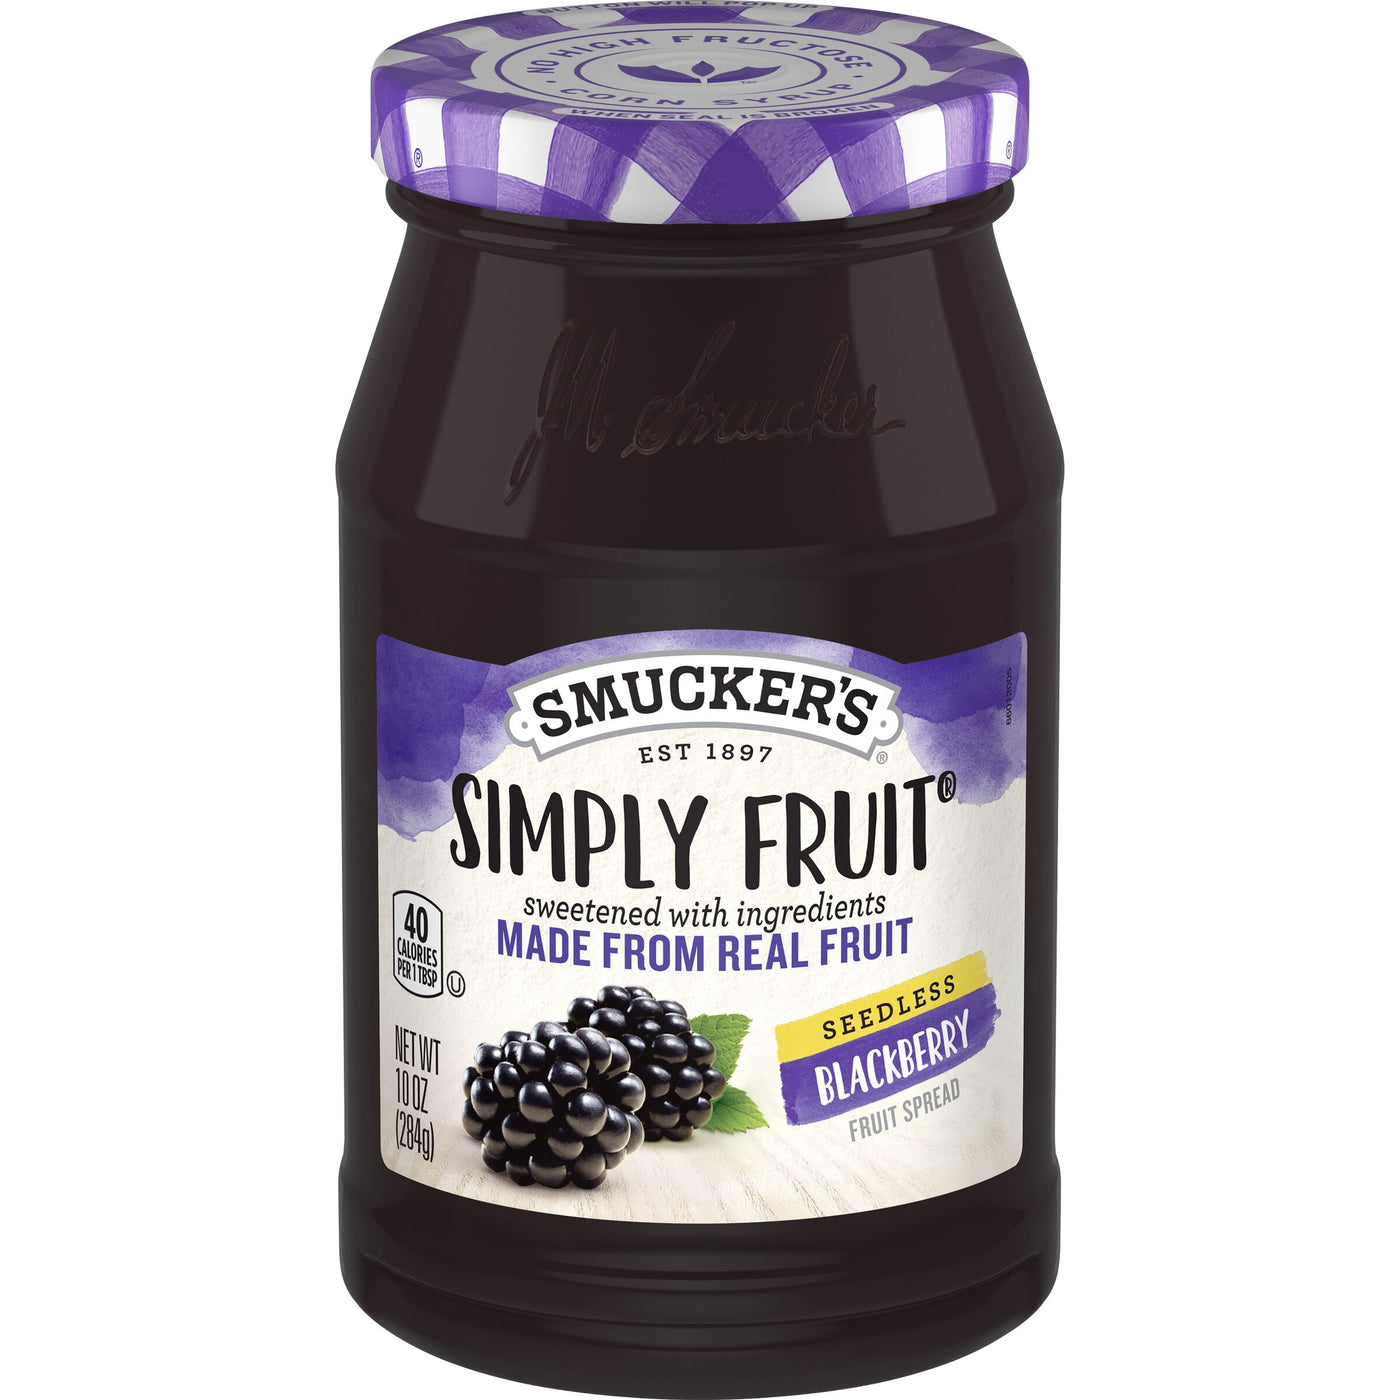 Smucker's Simply Fruit Seedless Blackberry Fruit Spread, 10 oz